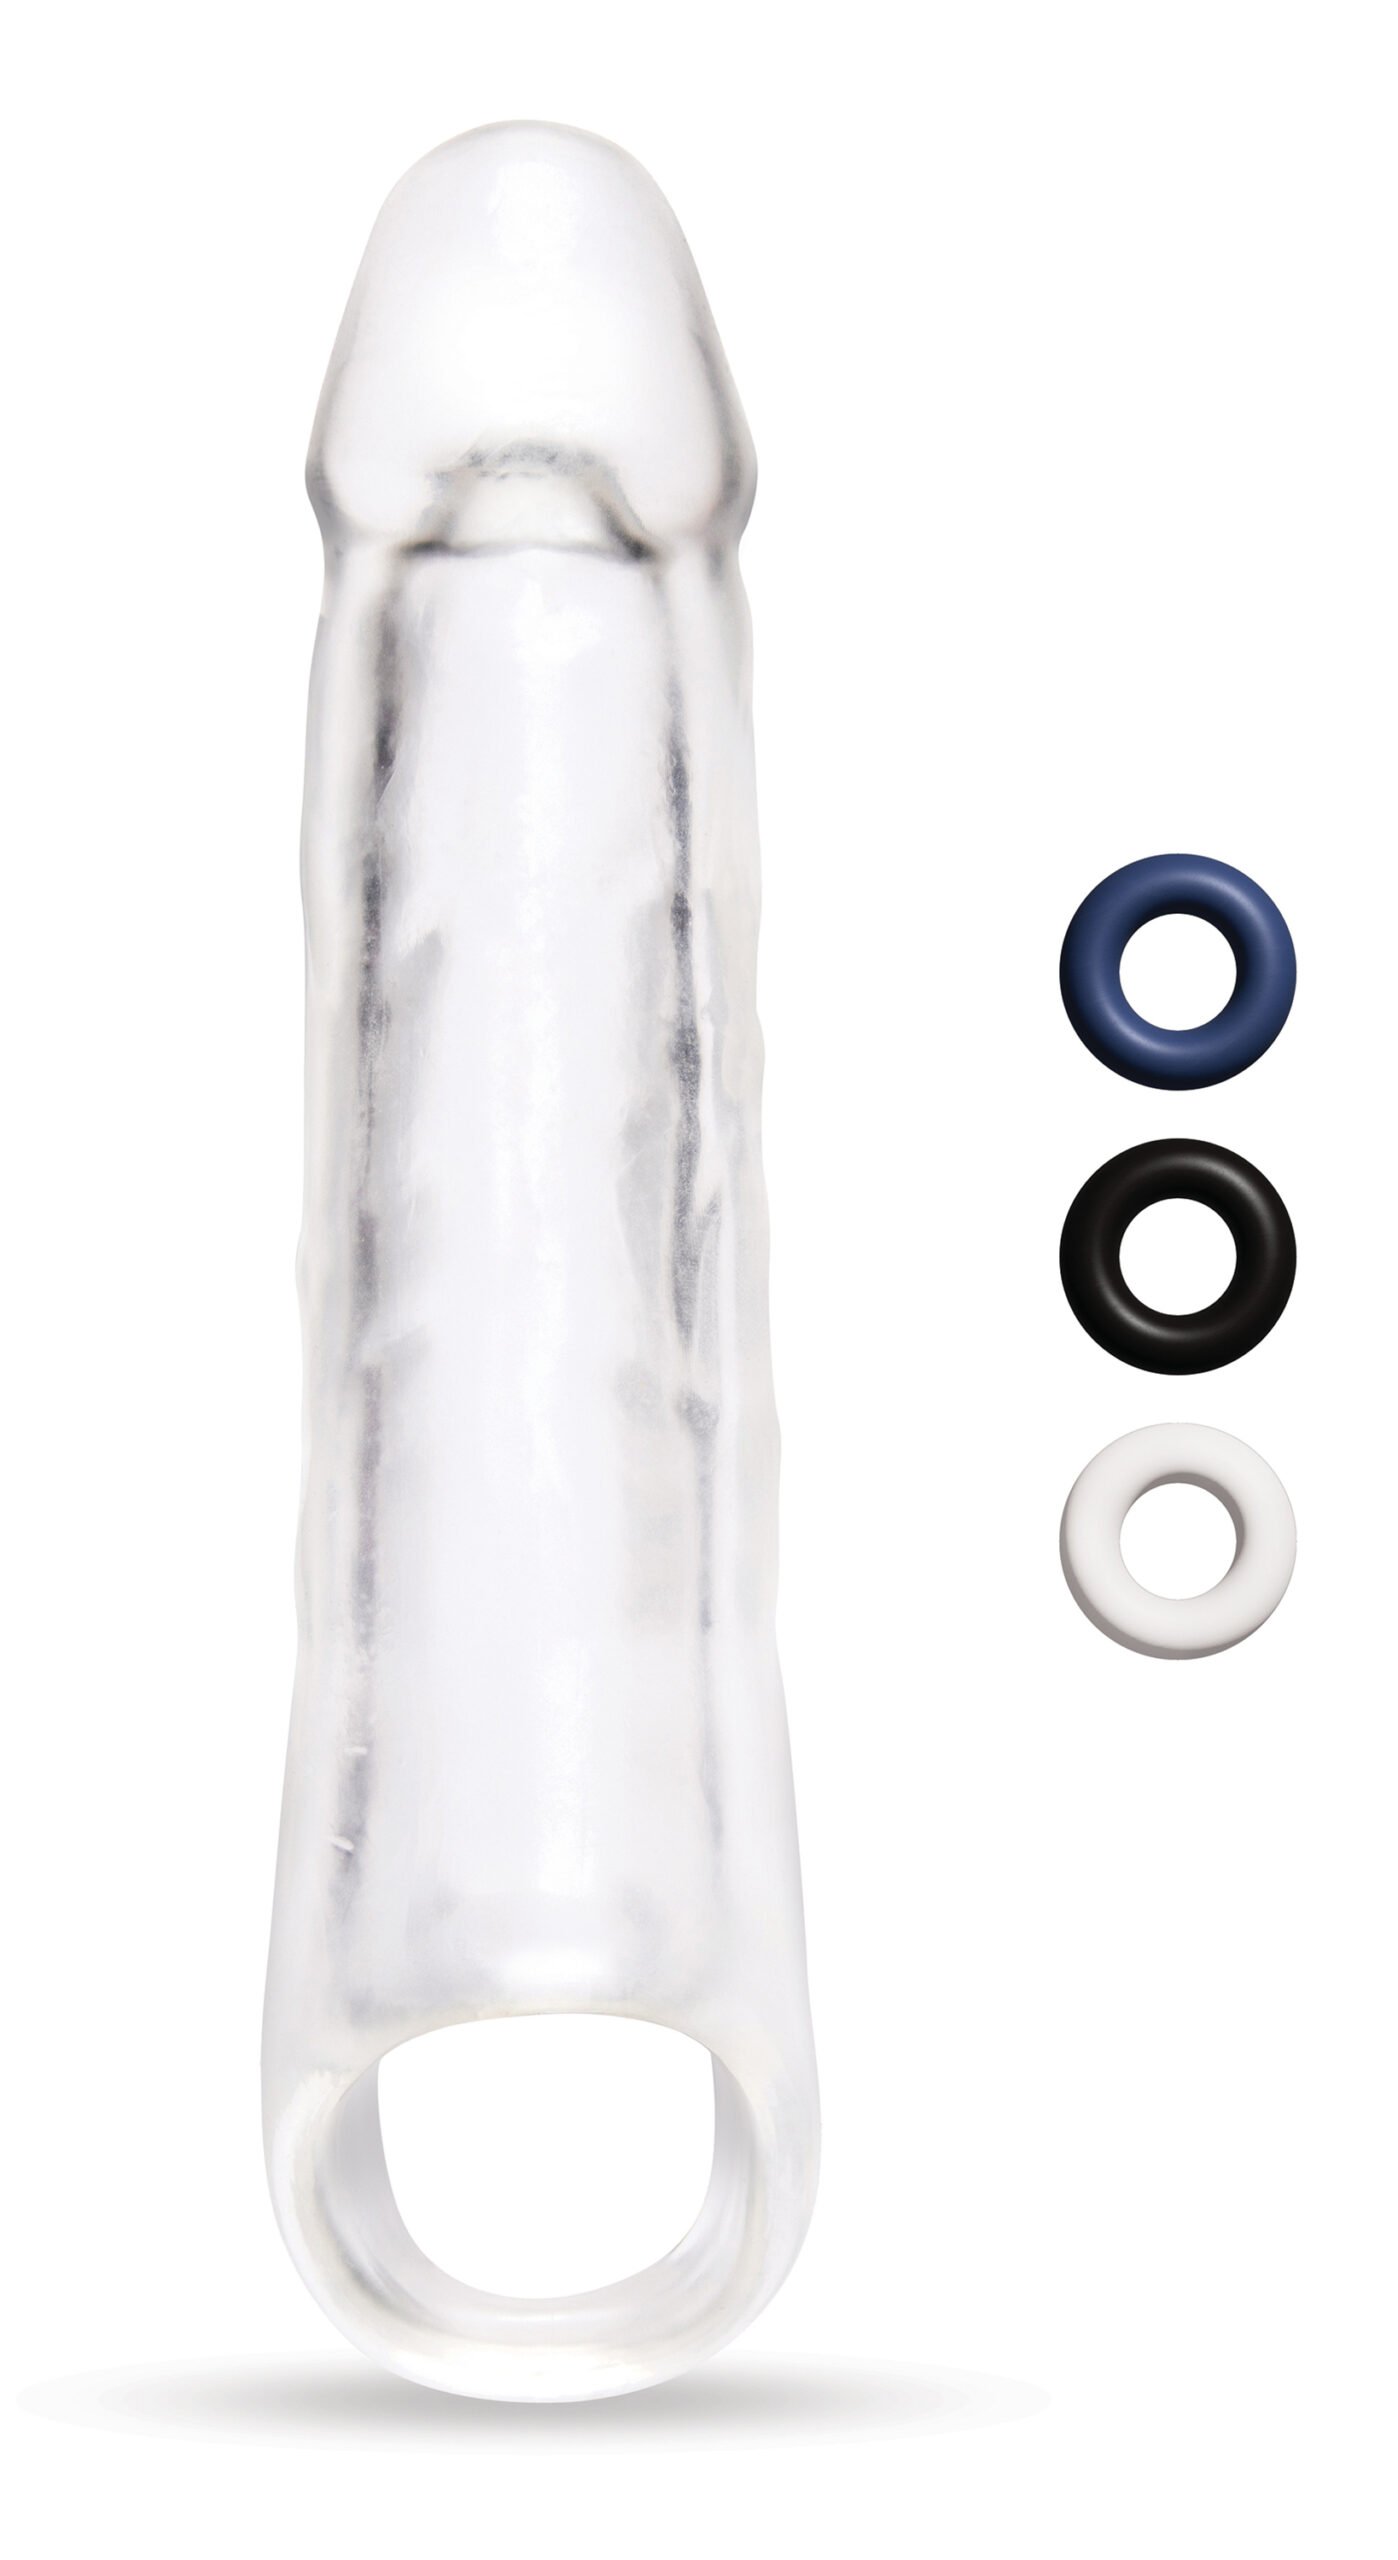 Size Up - Transparante penisverlenger met scrotumlus - 23,9 cm